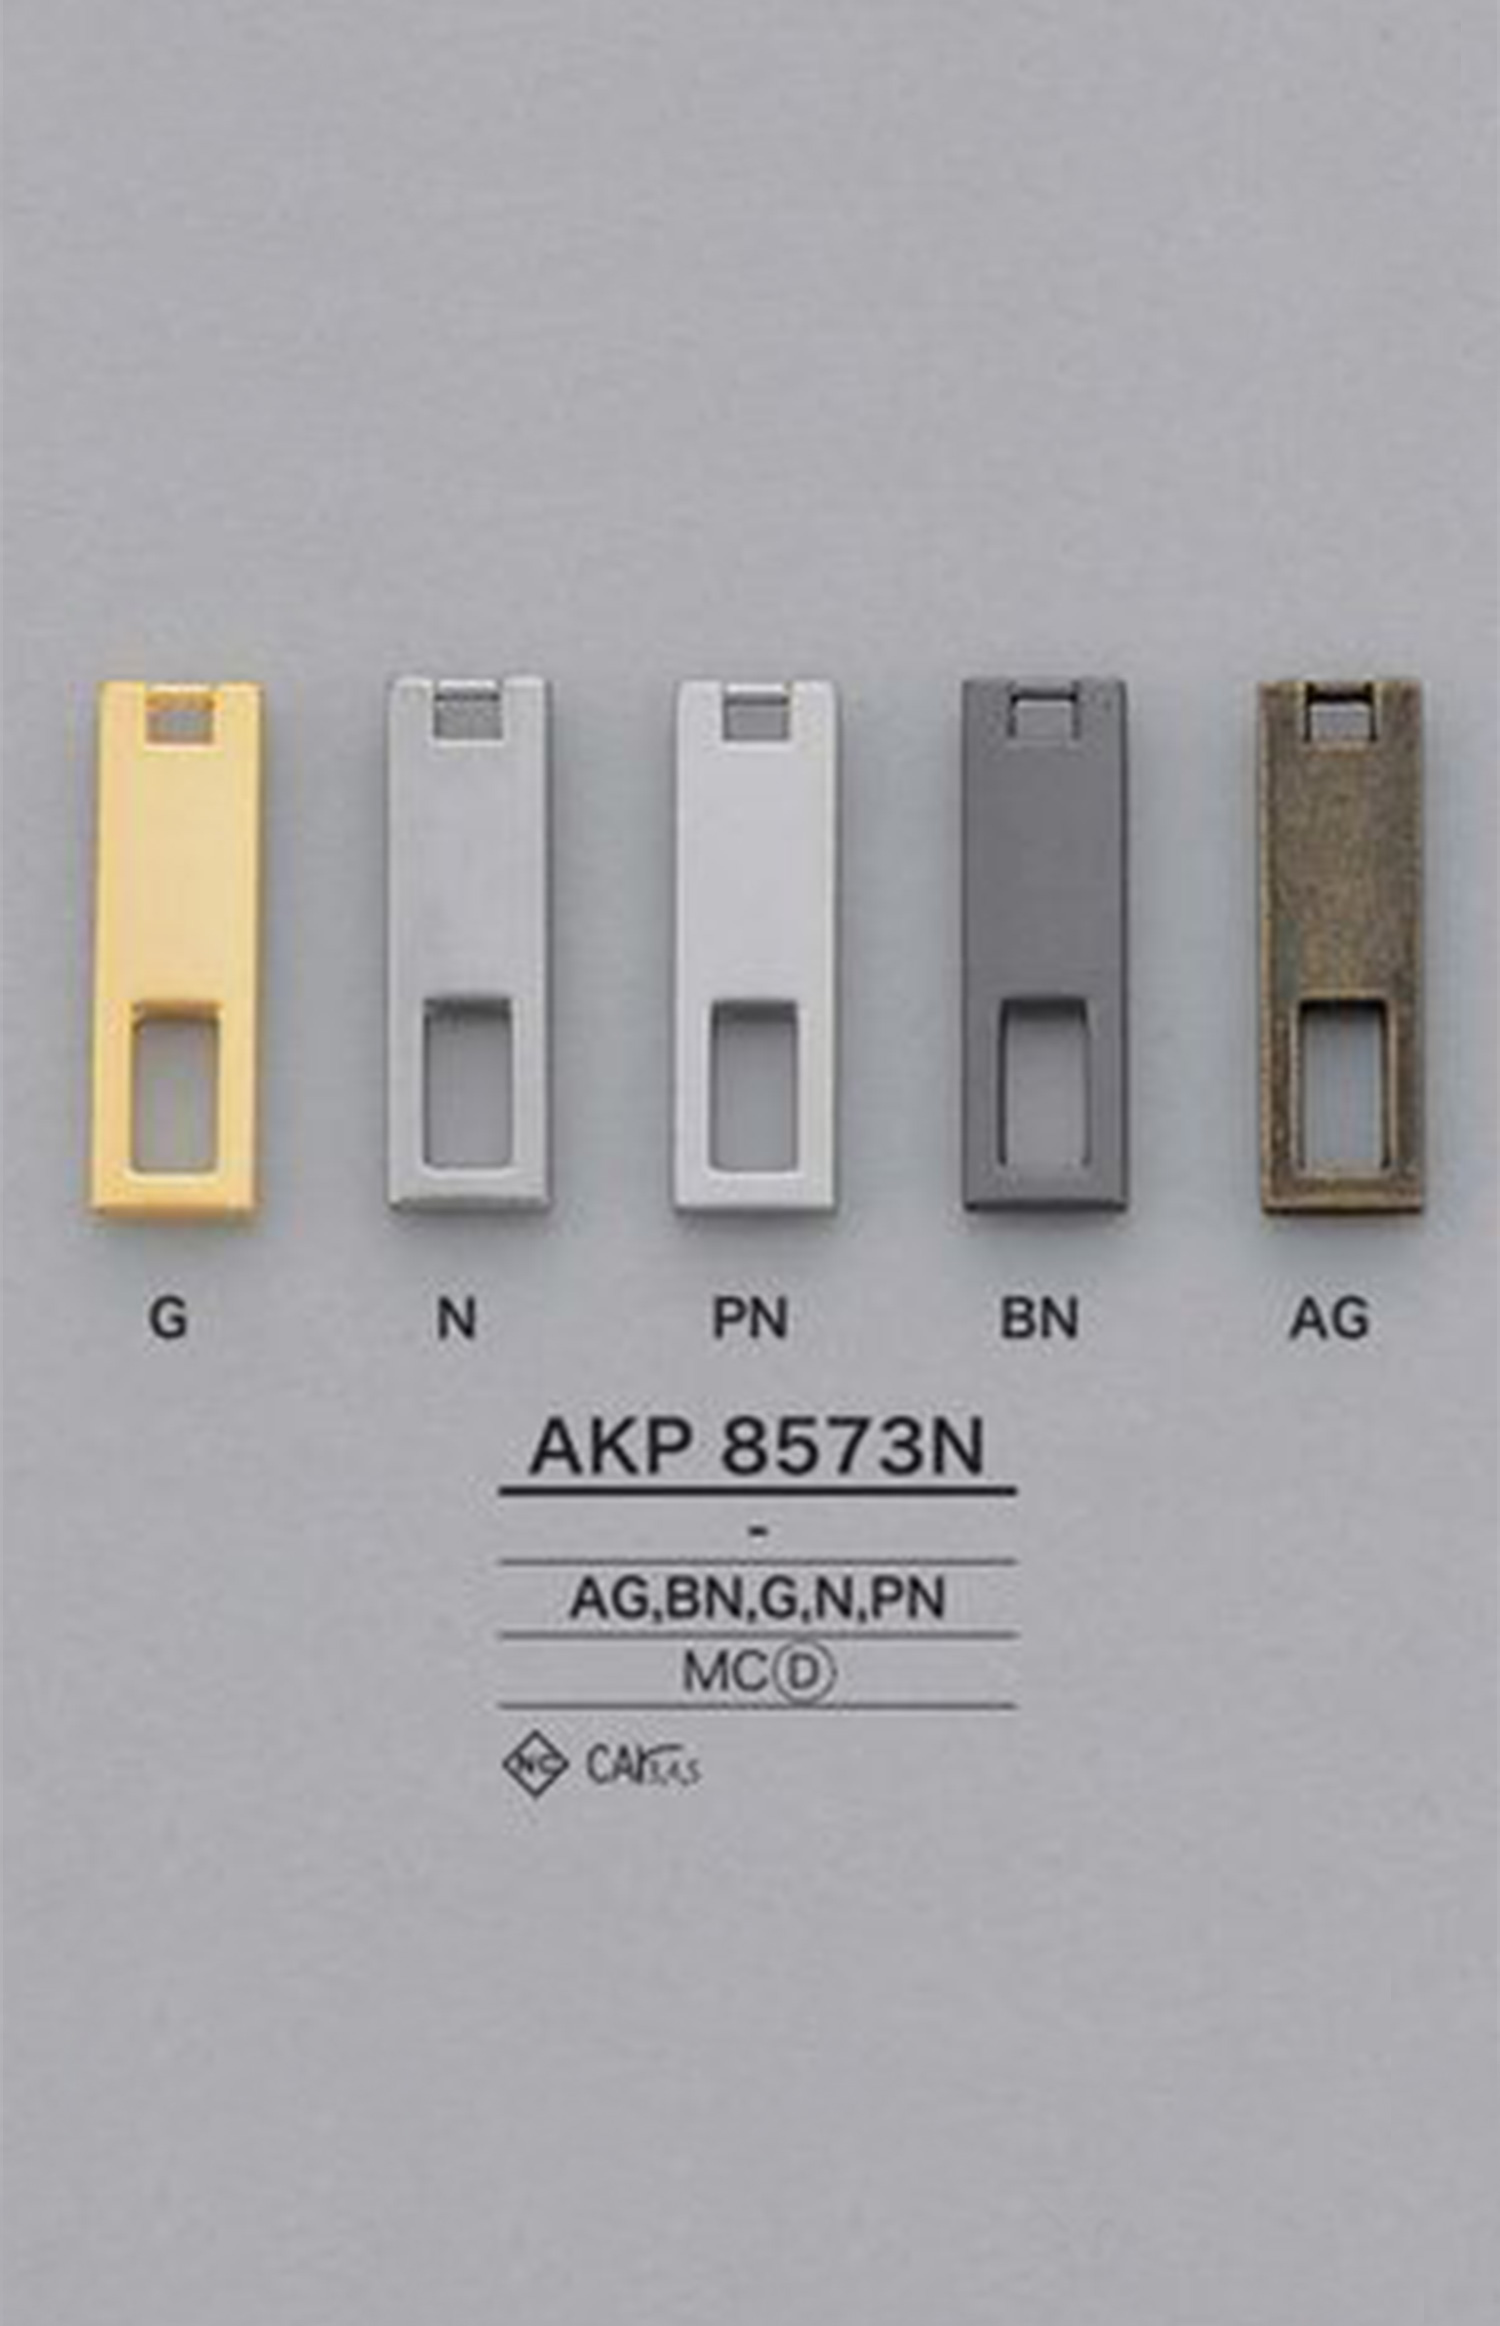 AKP8573N Square Zipper Point (Pull Tab) IRIS